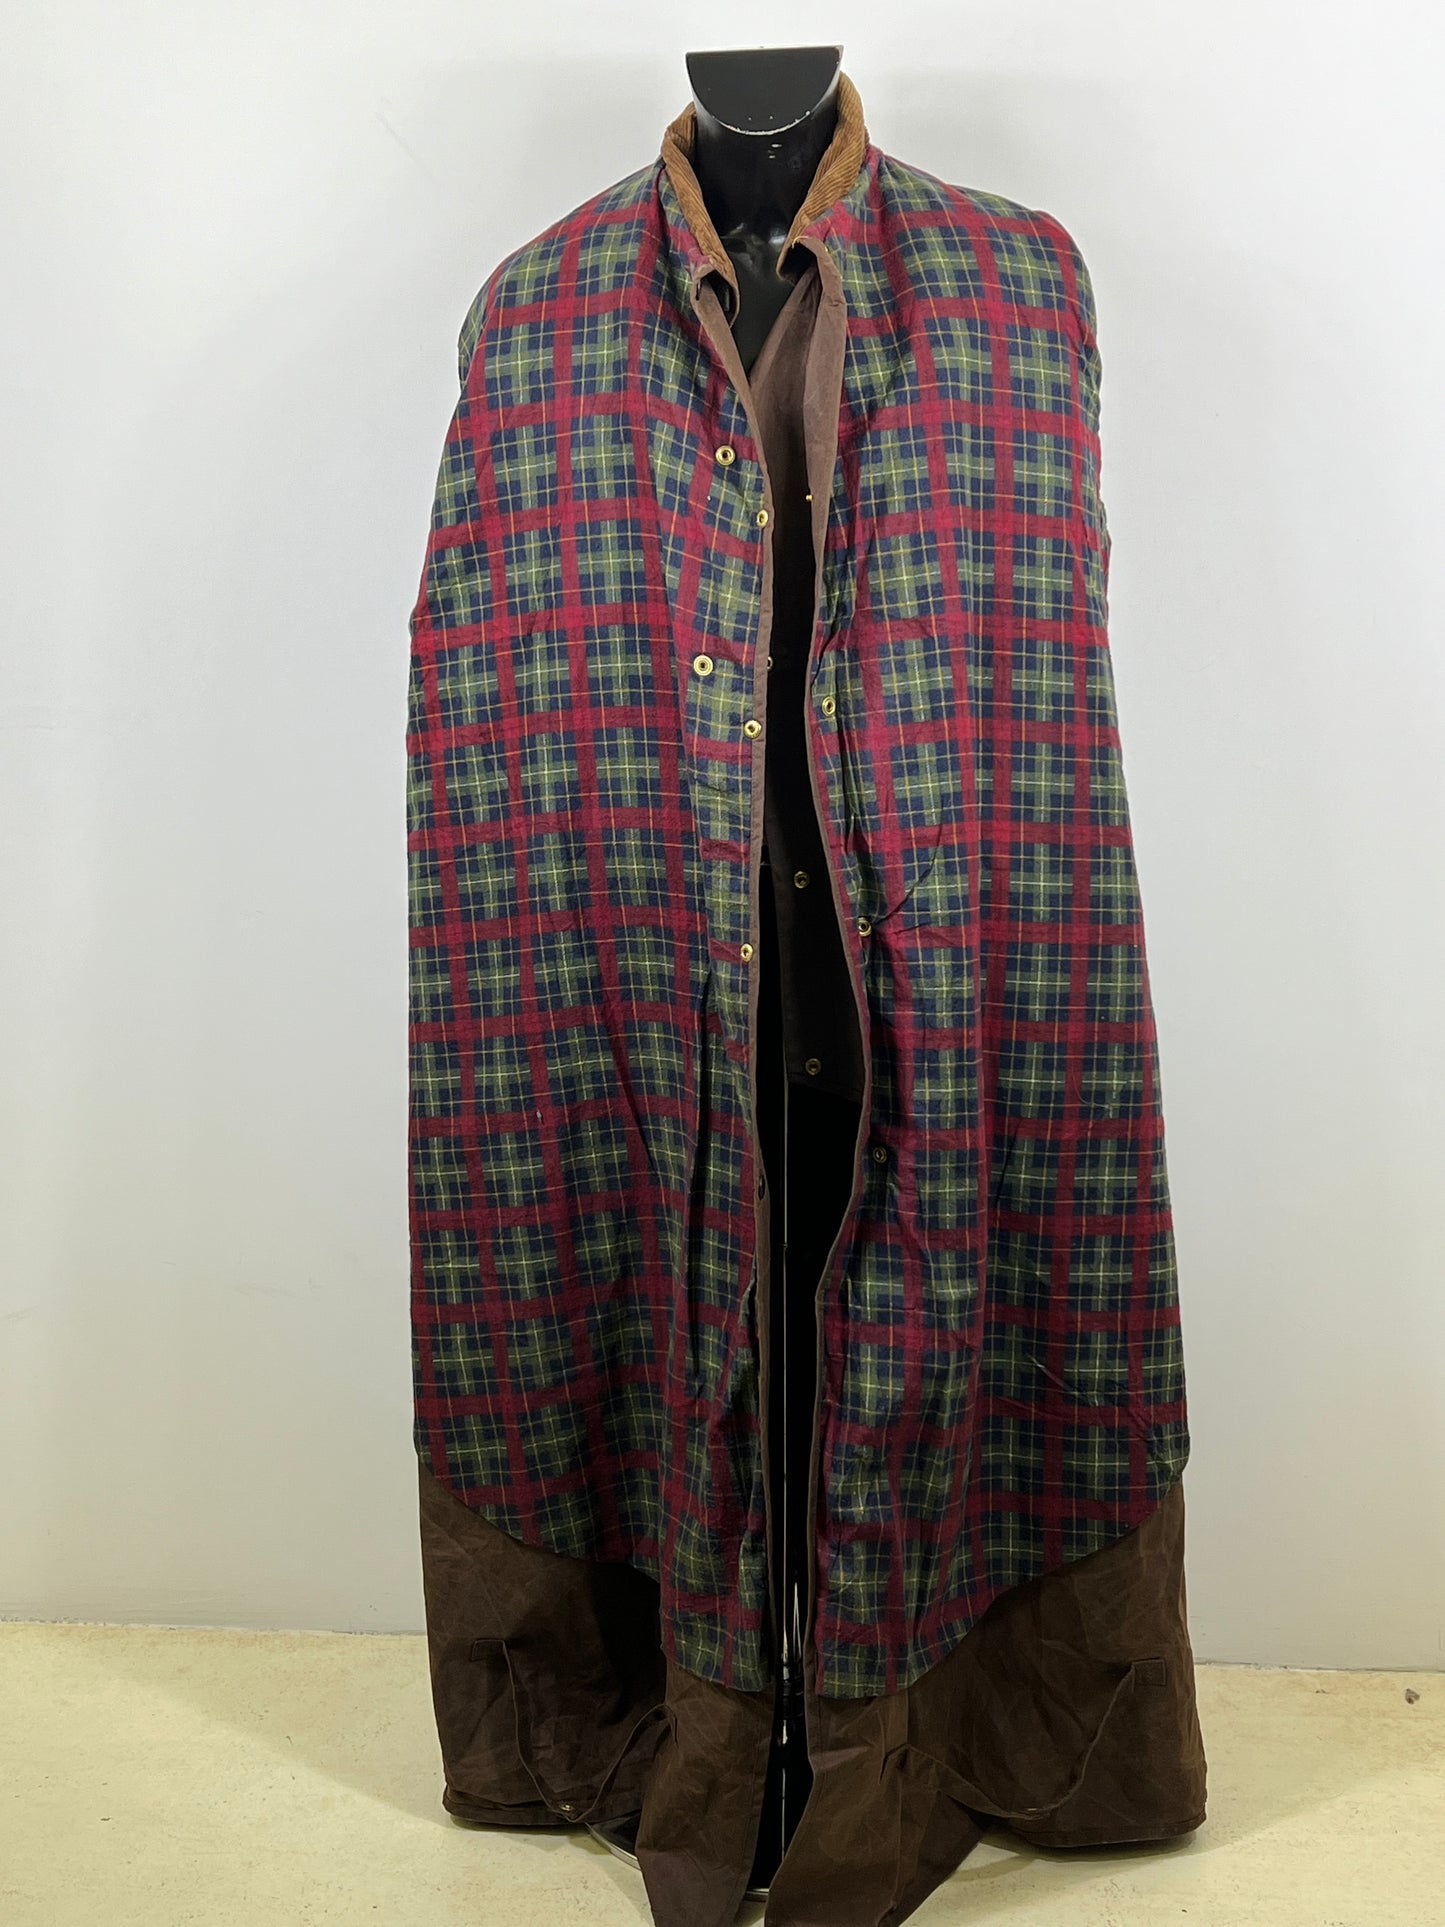 RARO Cappotto Barbour Backhouse lungo marrone C46/117 cm XLarge Man Brown wax Long Coat Size XL